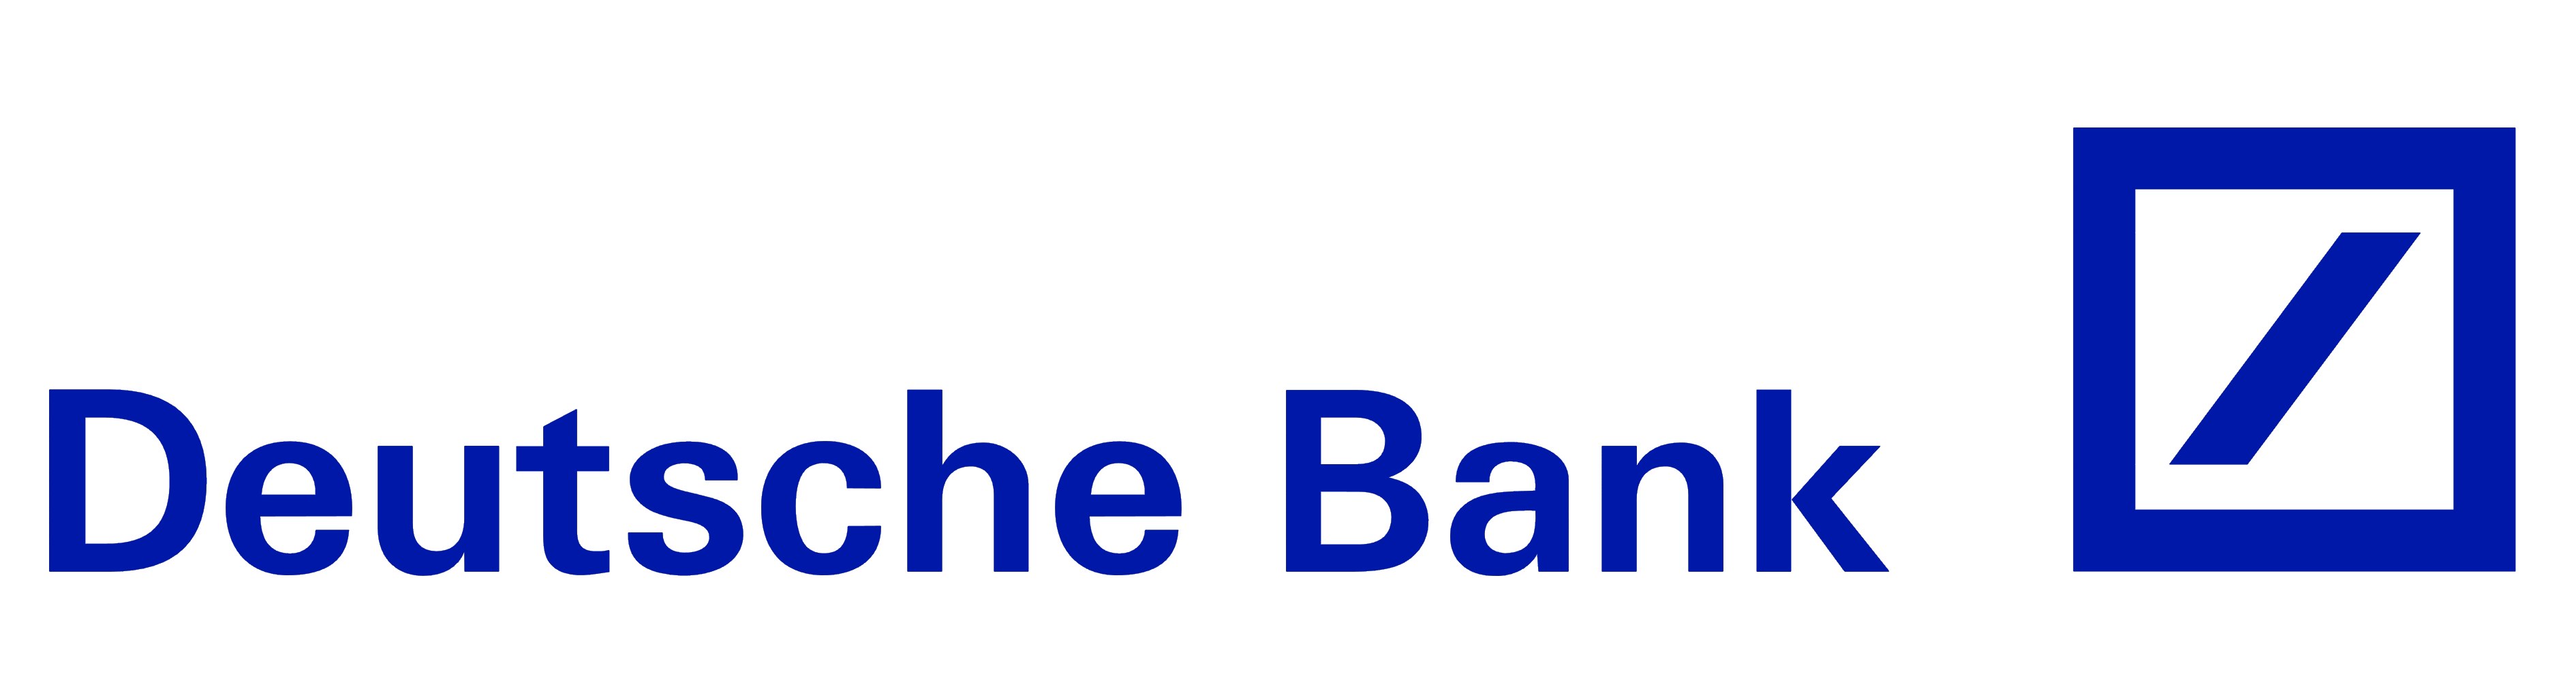 Deutsche Bank logo, logotype